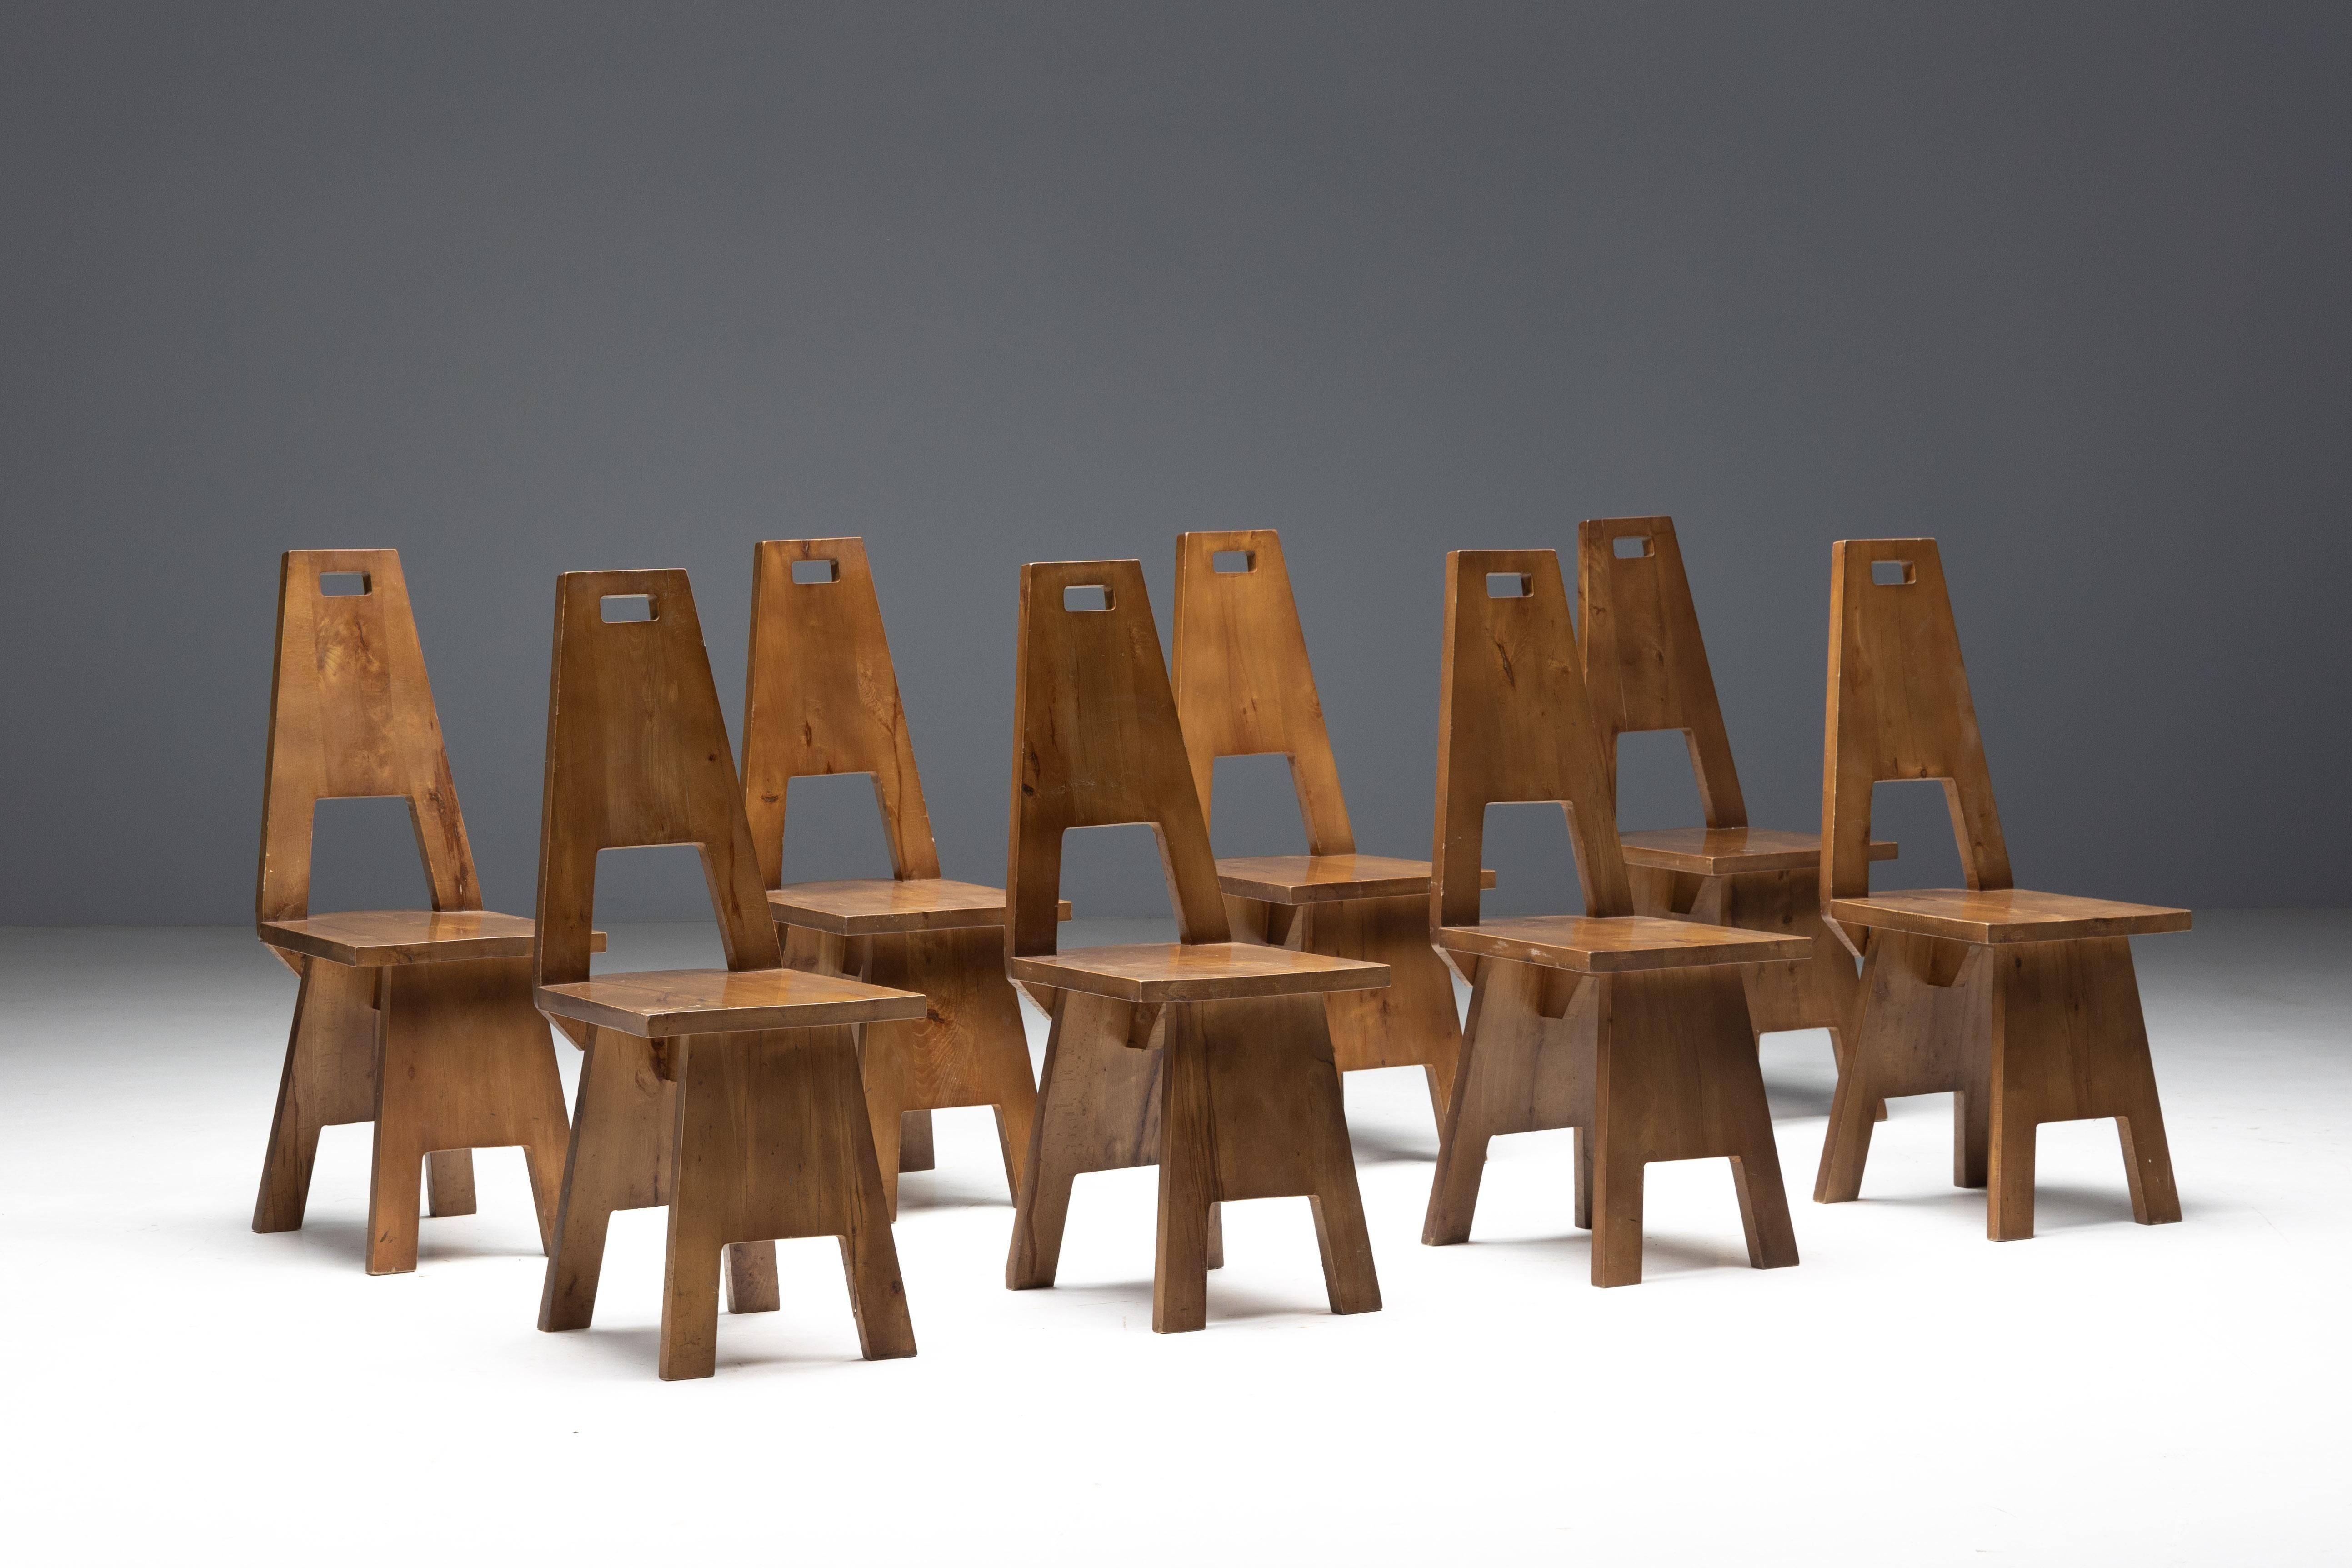 Wood Sculptural Brutalist Wabi Sabi Chairs, Netherlands, 1960s For Sale